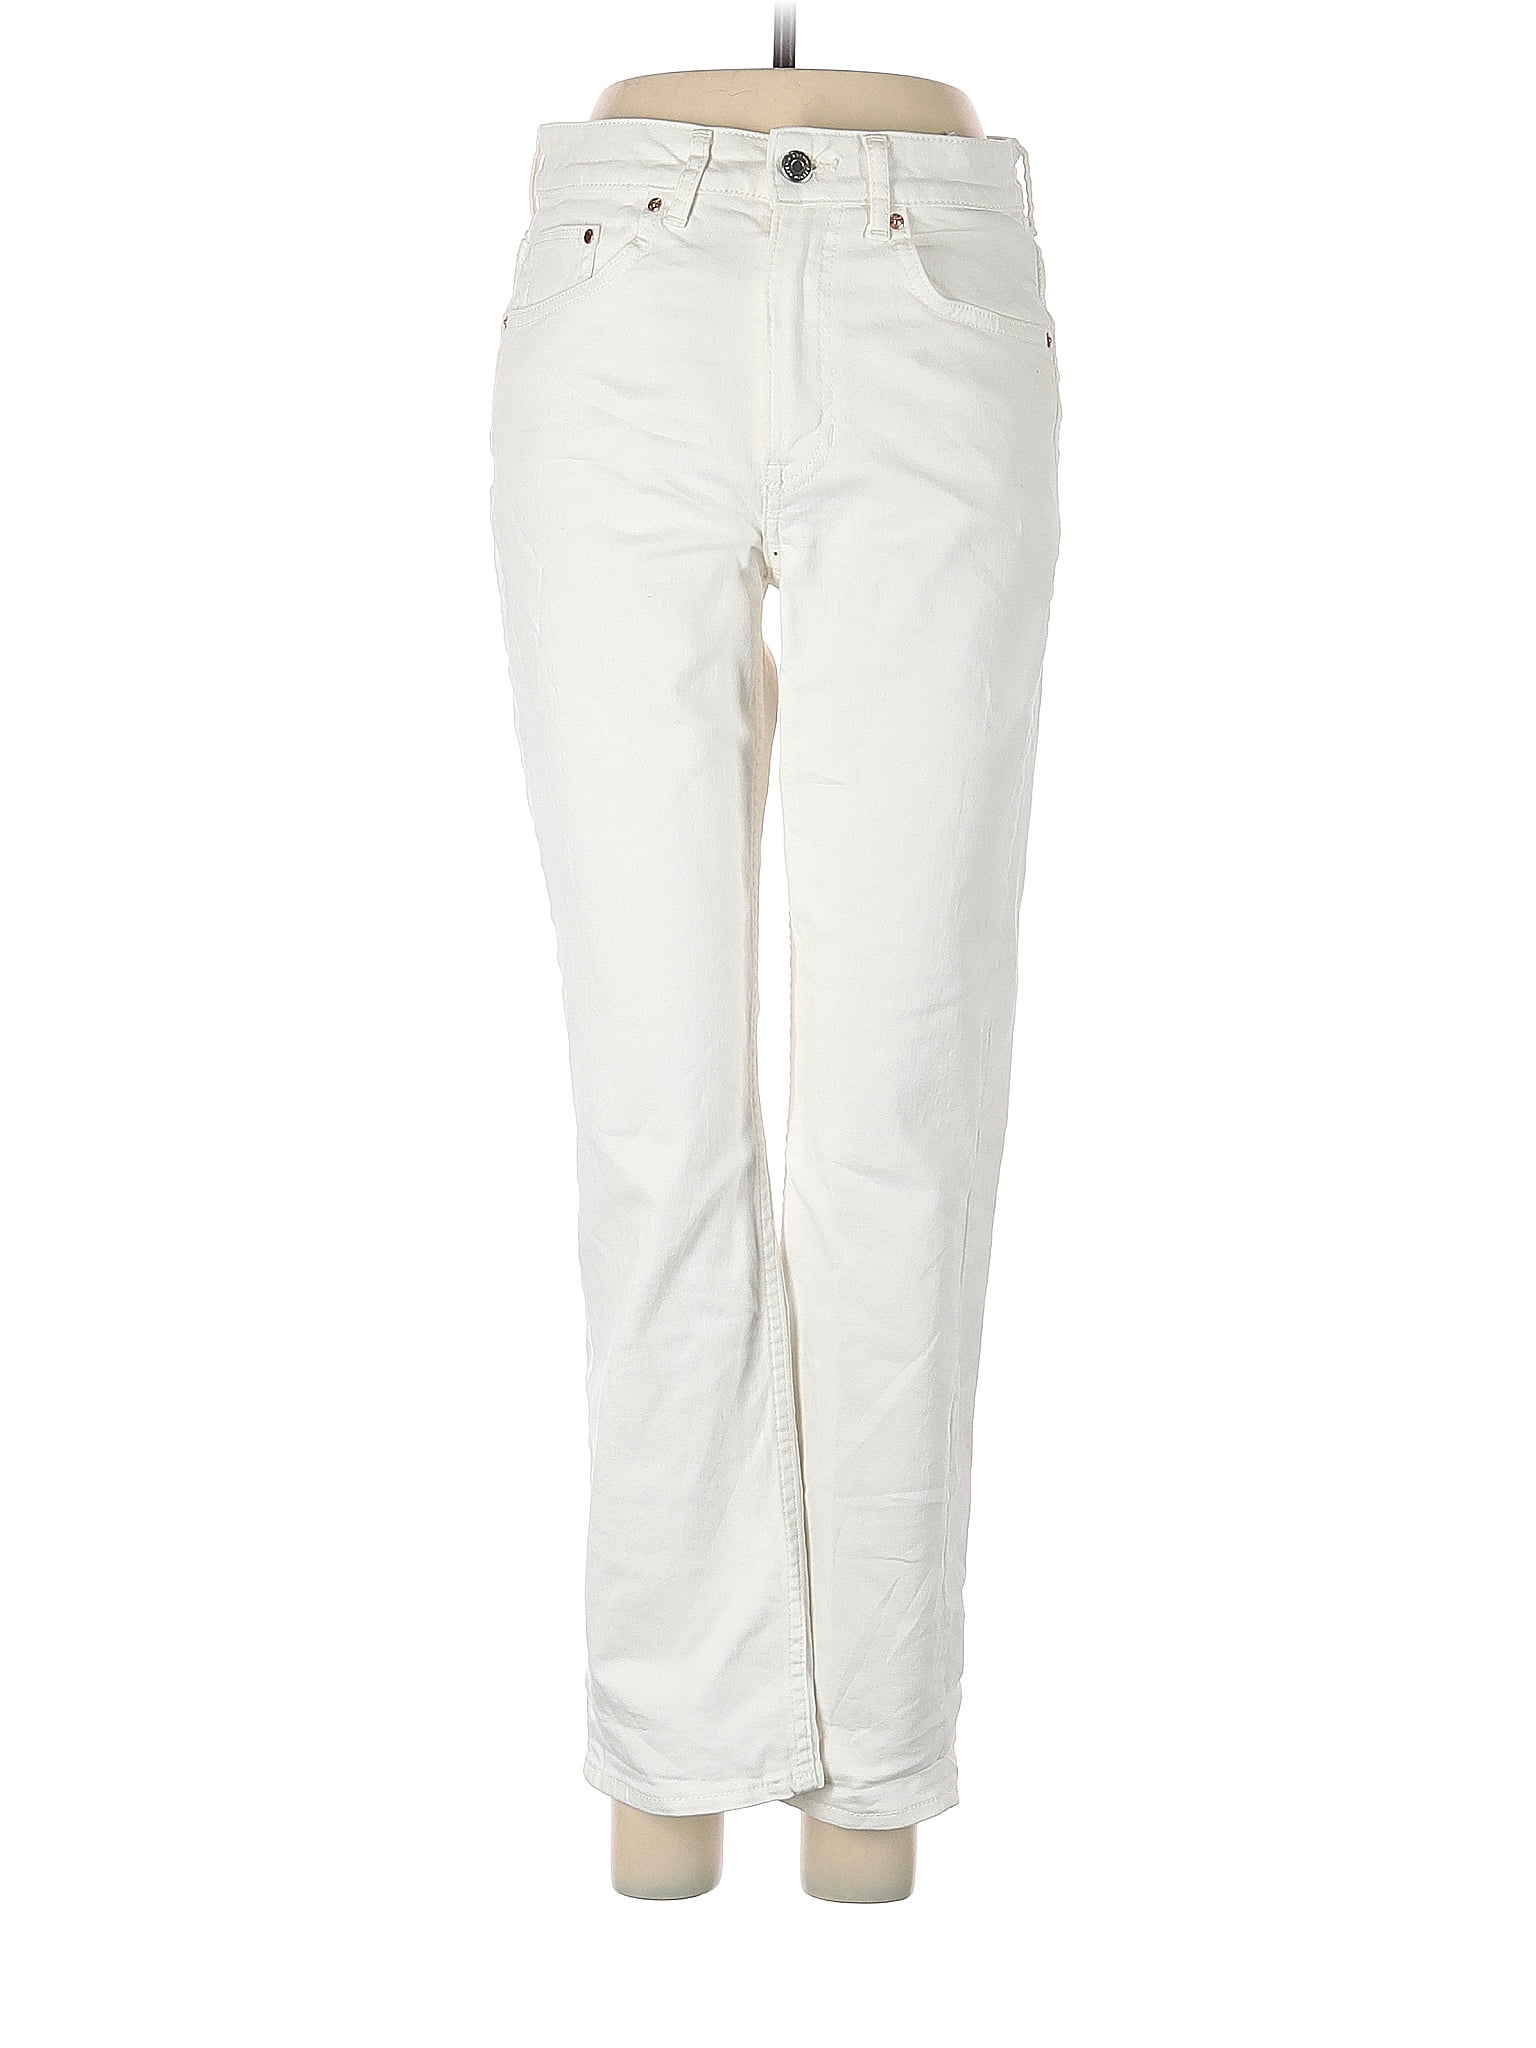 &Denim by H&M Ivory Jeans Size 6 - 68% off | thredUP